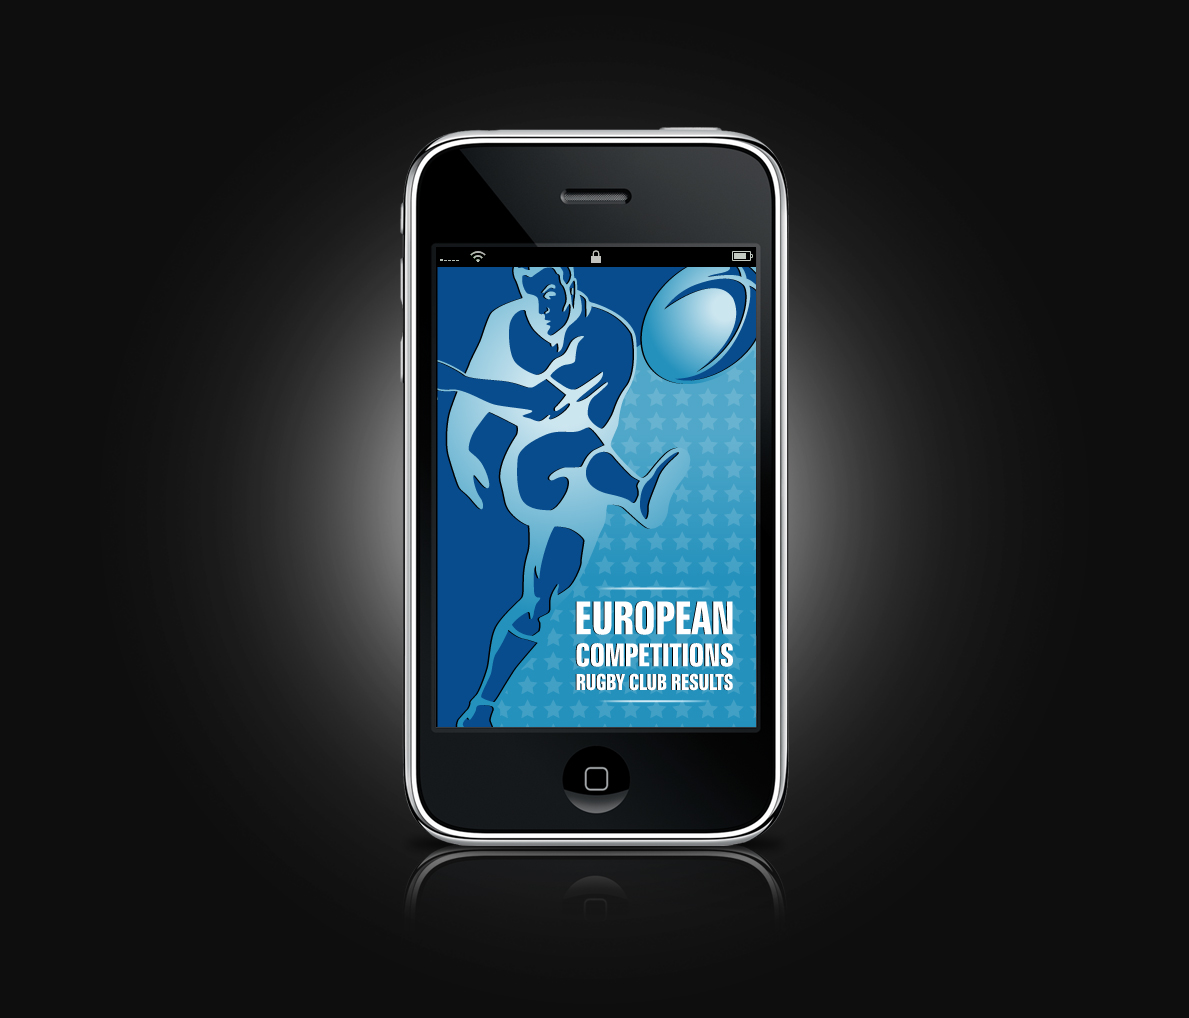 ... /Hv_83pJAC8k/s1600/european_rugby_iphone_app_by_azhaan-d3bdp2p.jpg